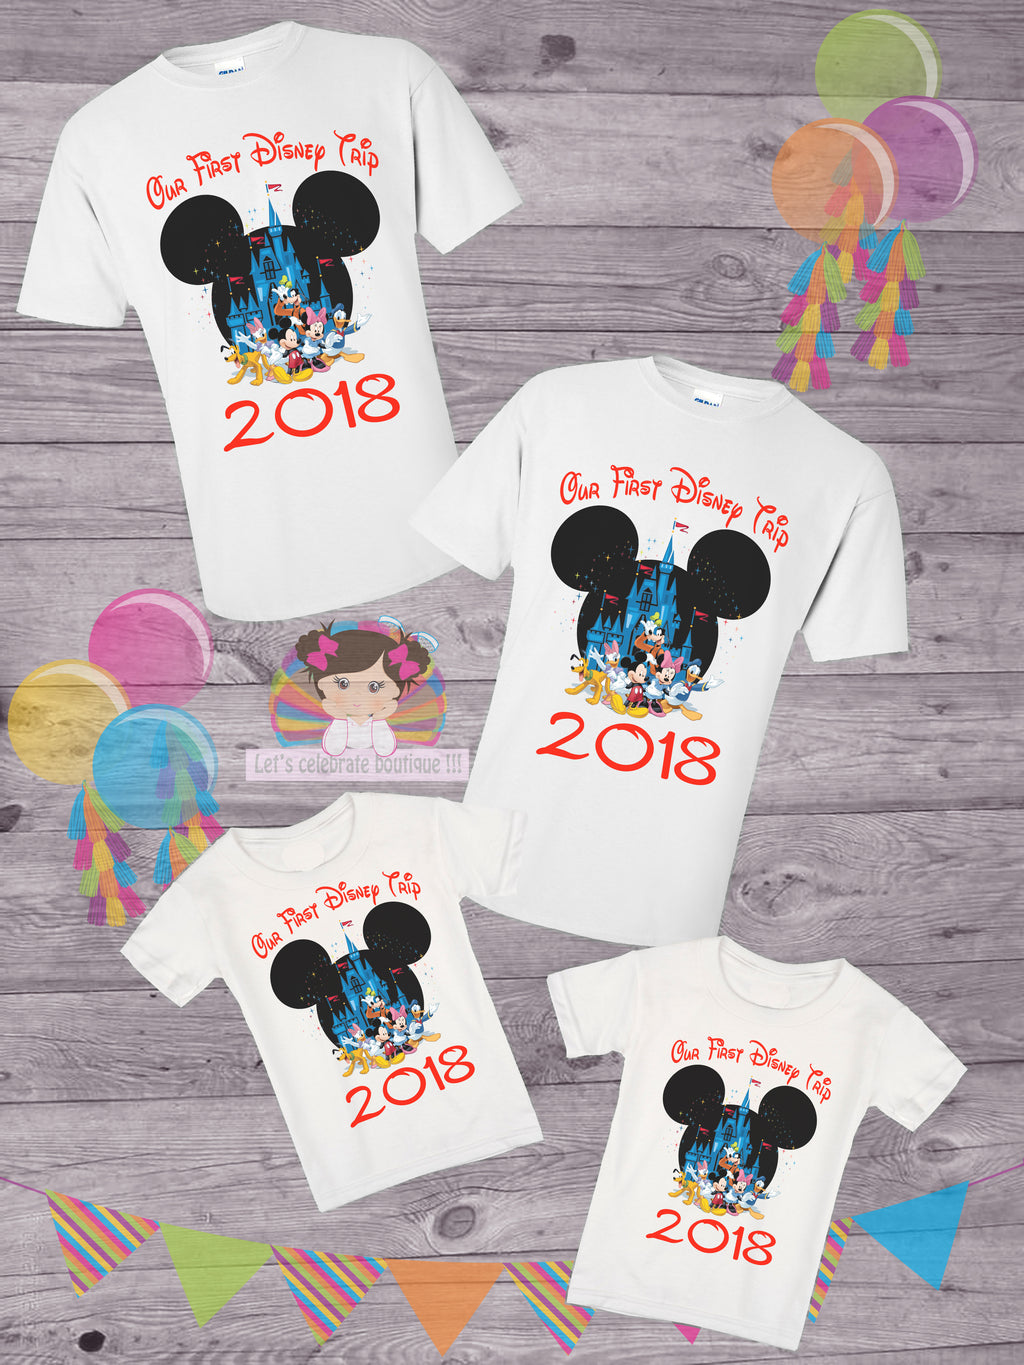 Trip Family Shirts-Mouse Family trip shirts-Vacation shirts